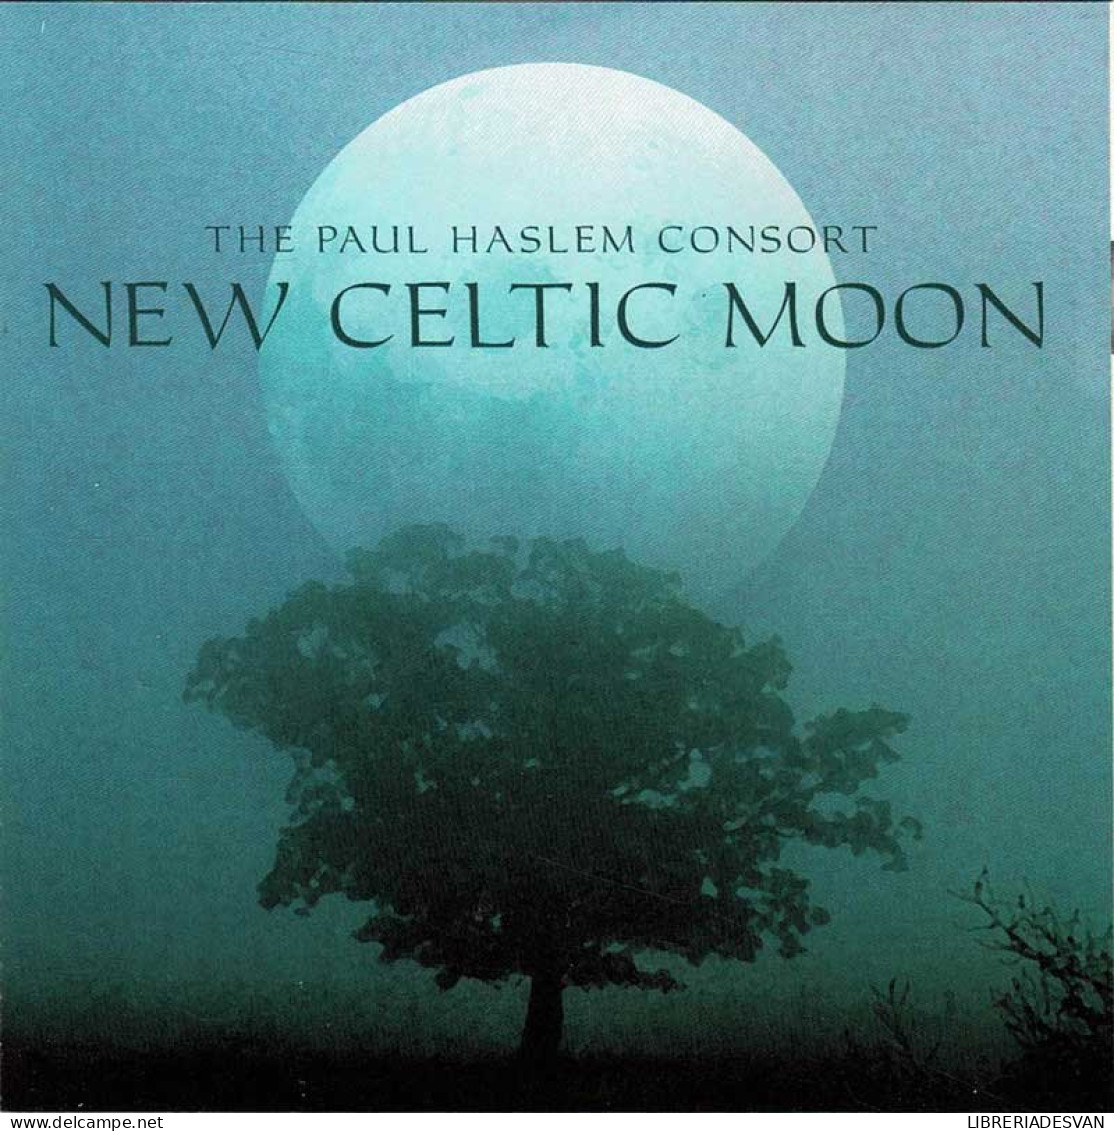 The Paul Haslem Consort - New Celtic Moon. CD - Nueva Era (New Age)